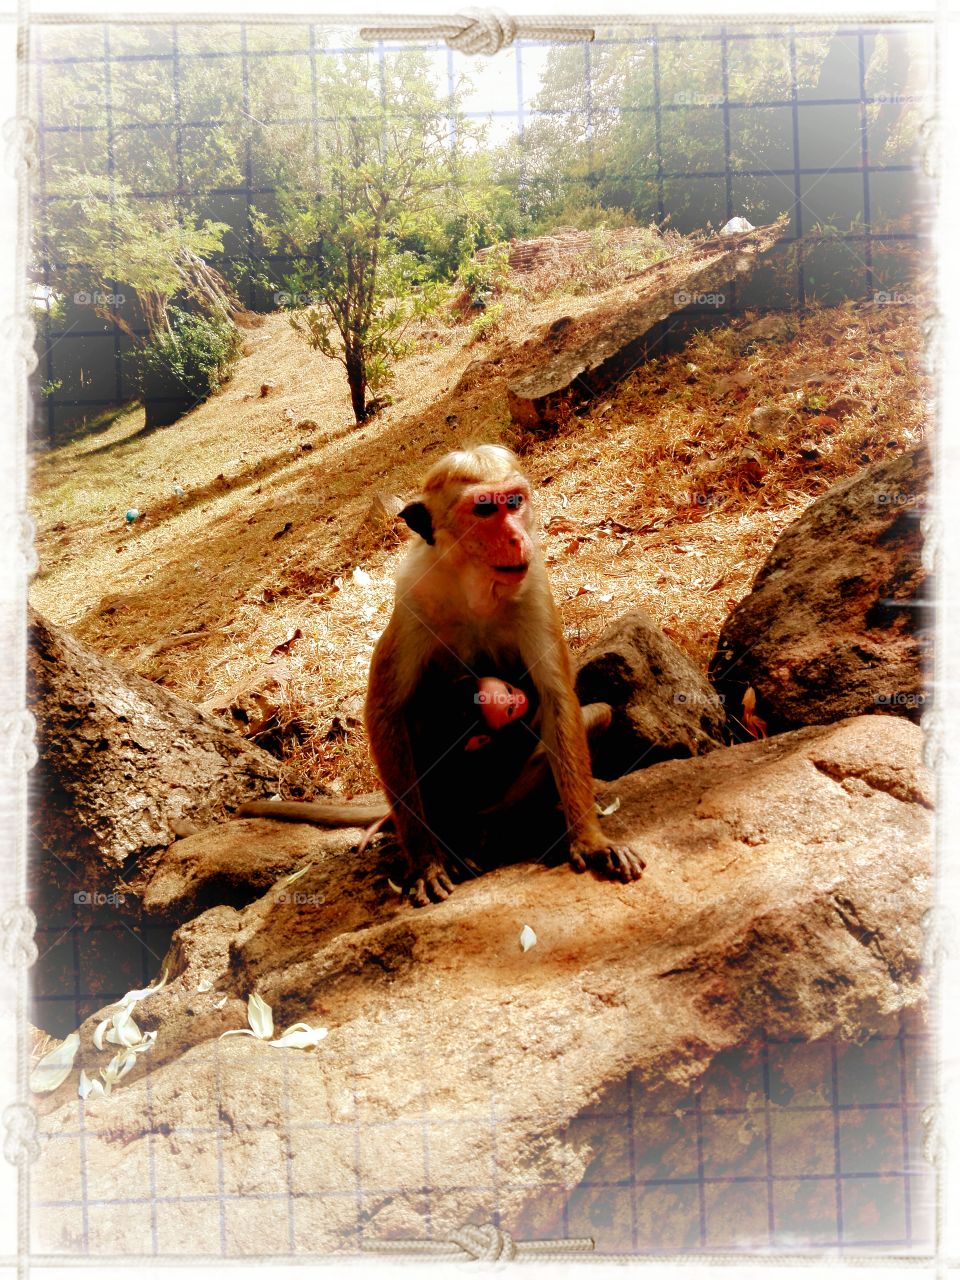 I so this sri lanka aruradhapura histri town mother monkey and baby monkey